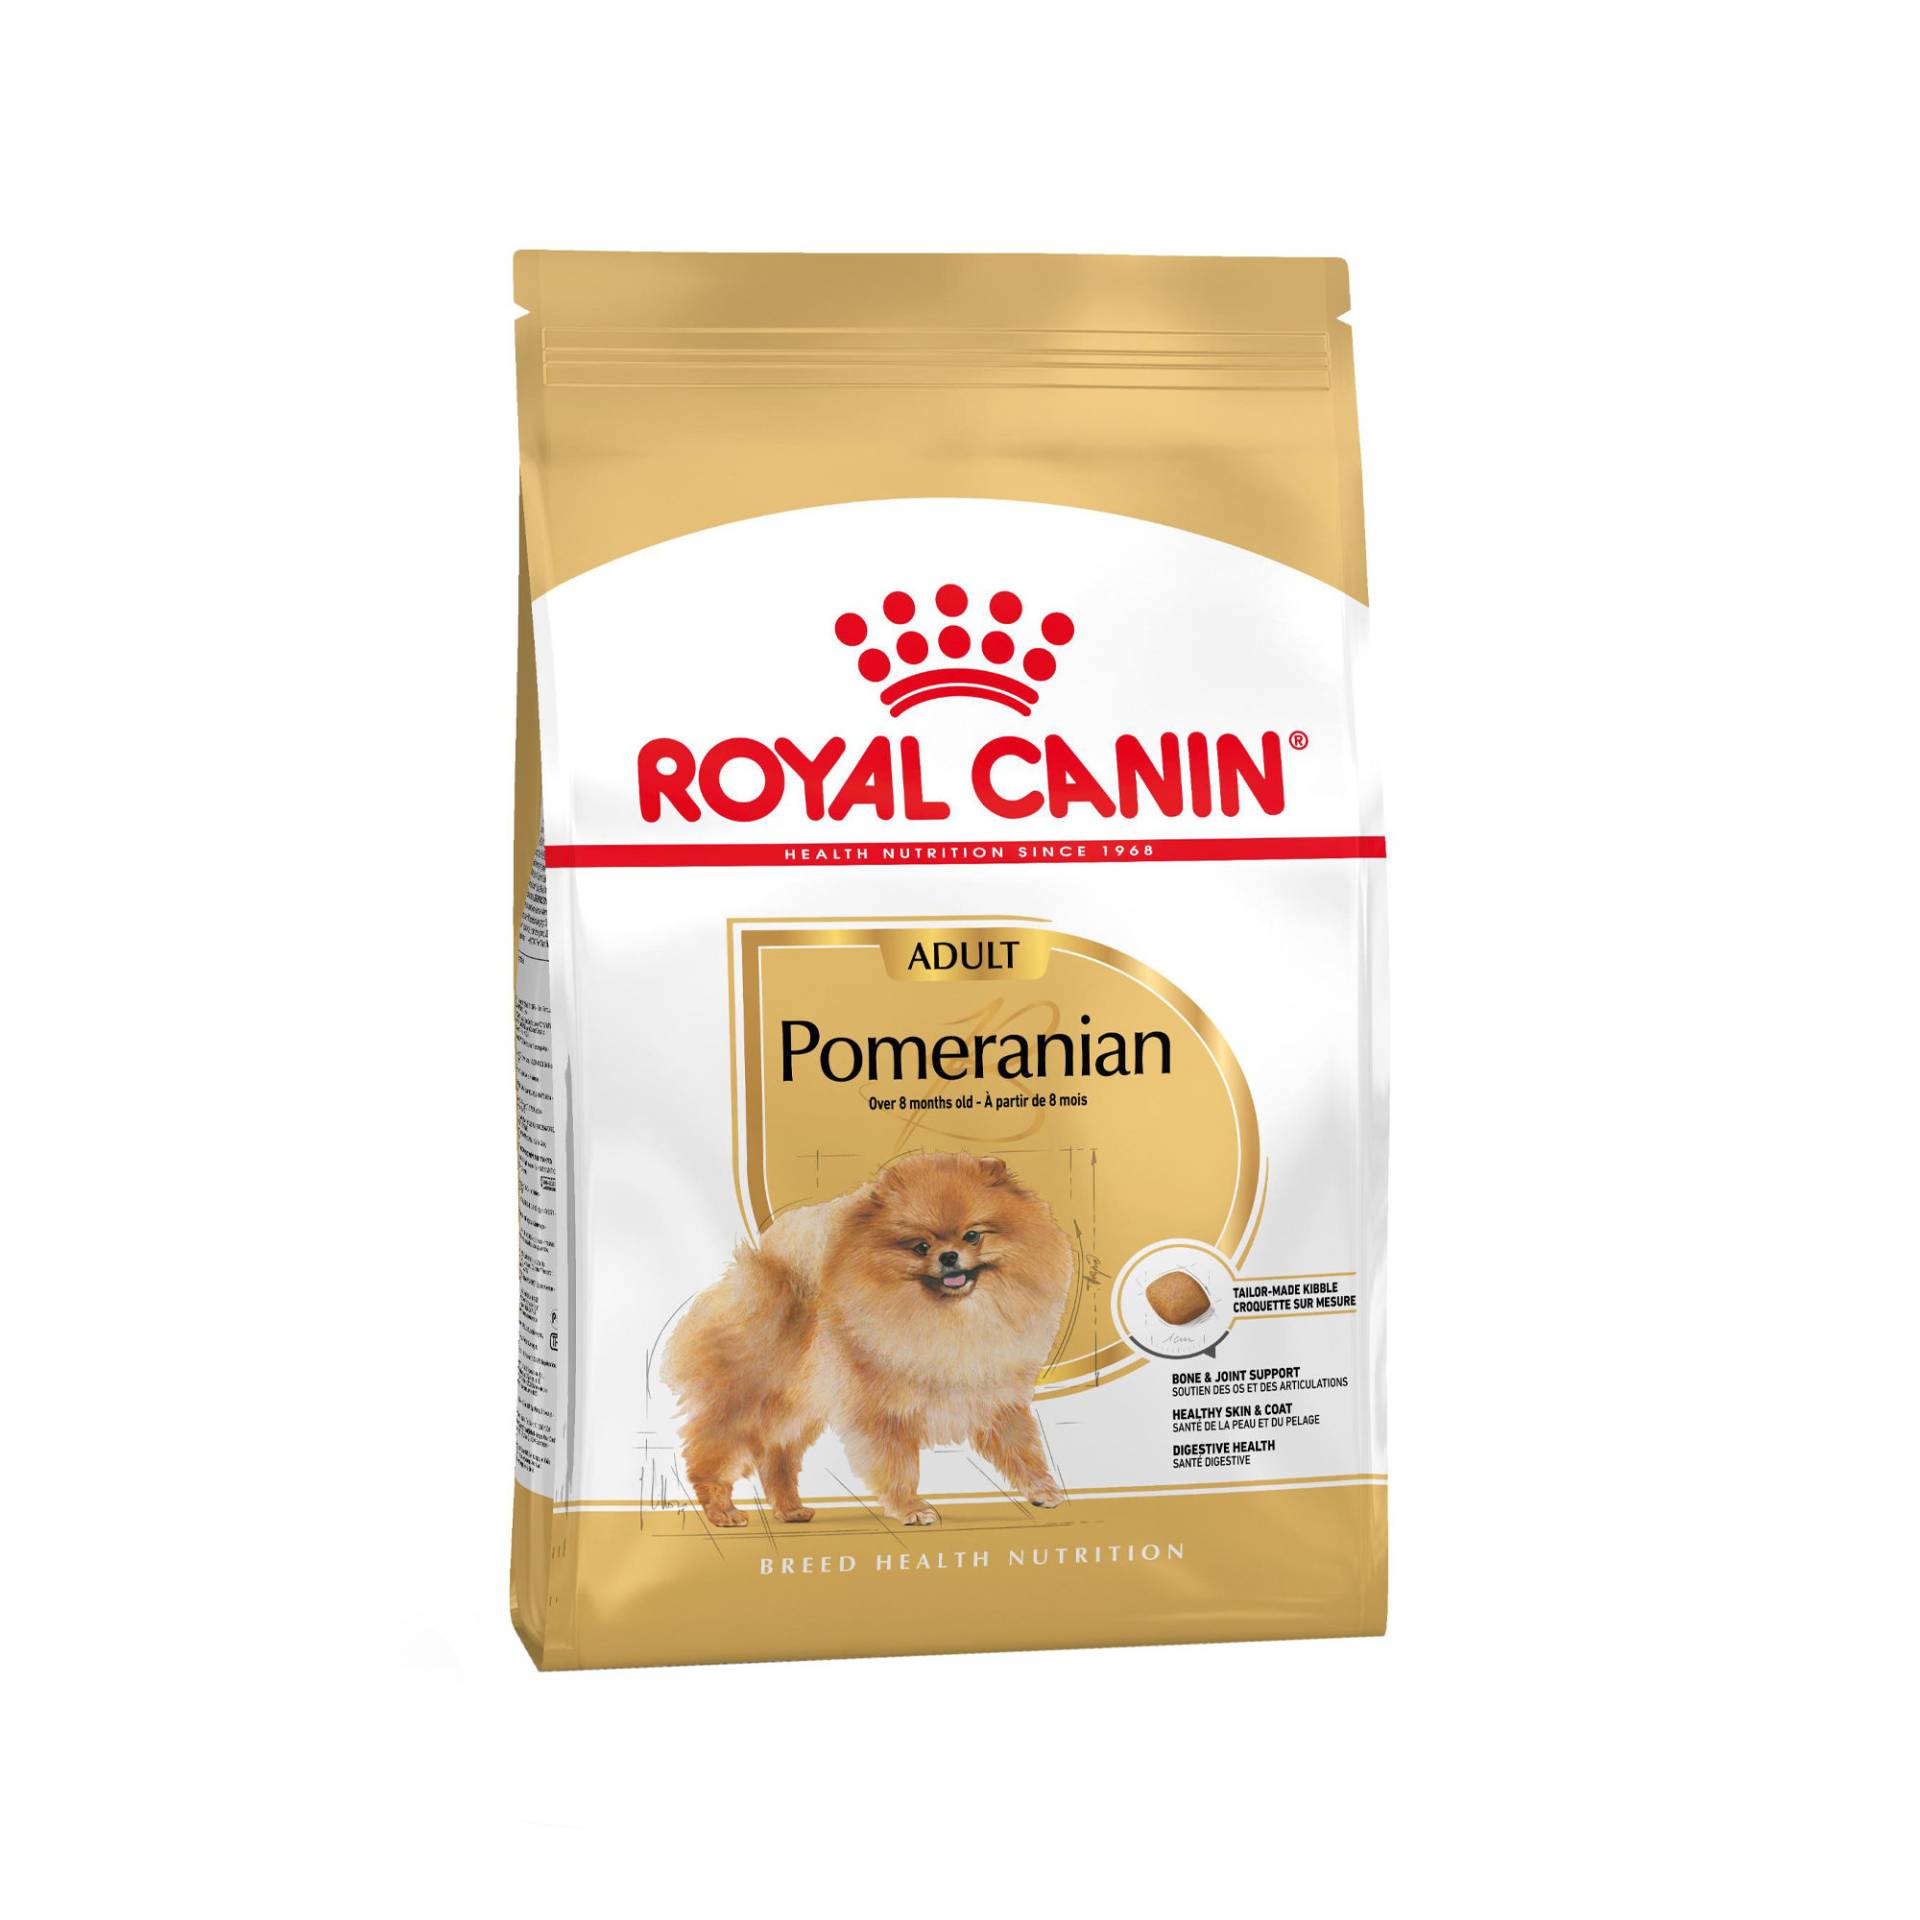 Royal Canin Pomeranian Adult - 3 kg von Royal Canin